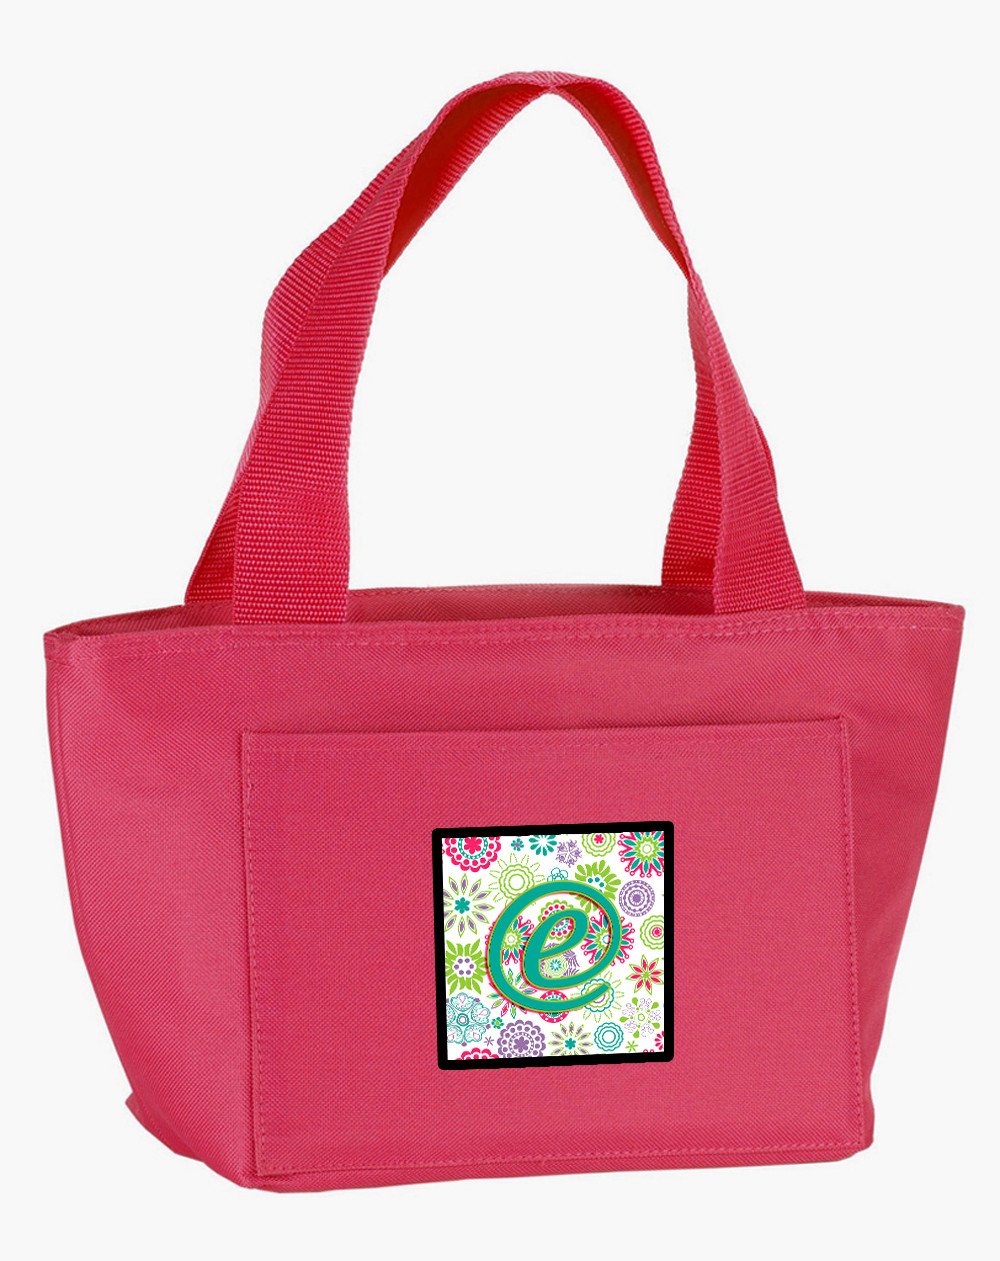 Letter E Flowers Pink Teal Green Initial Lunch Bag CJ2011-EPK-8808 by Caroline's Treasures